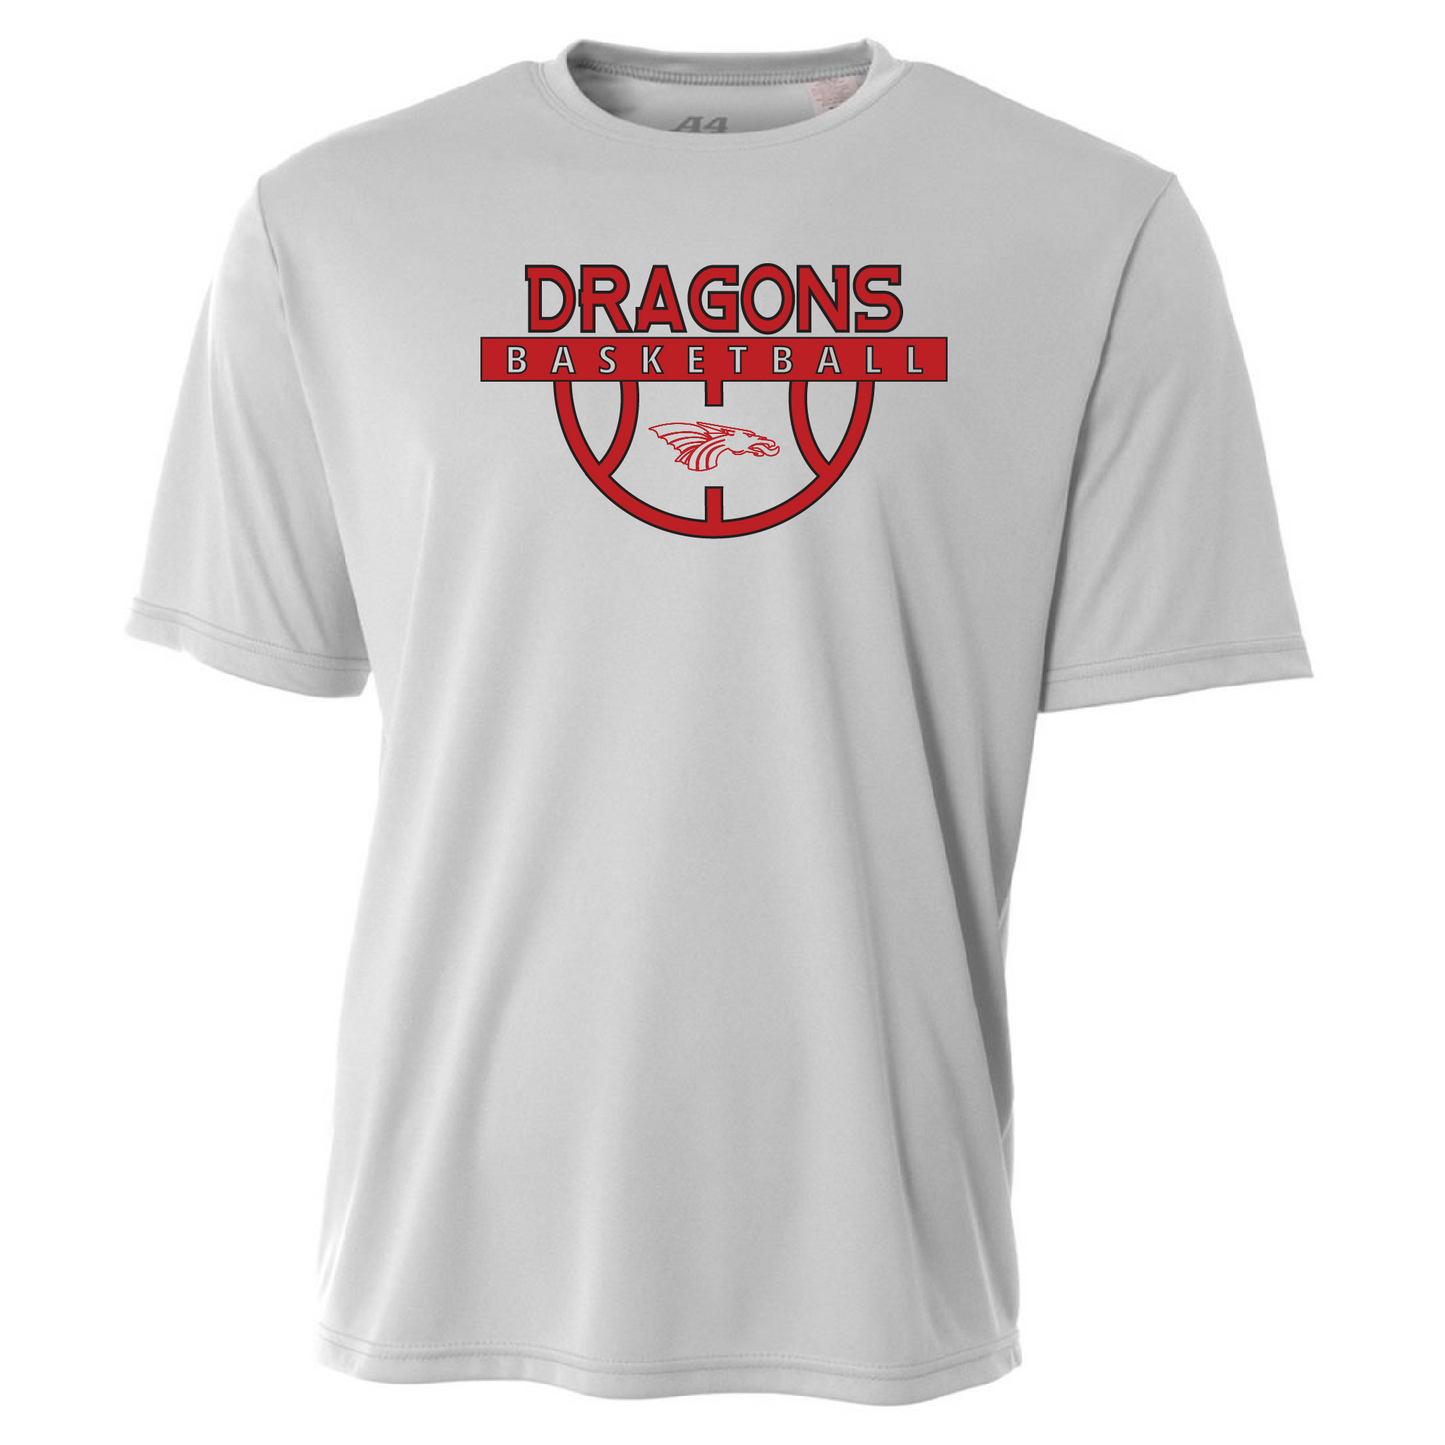 Mens S/S T-Shirt - Dragons Basketball